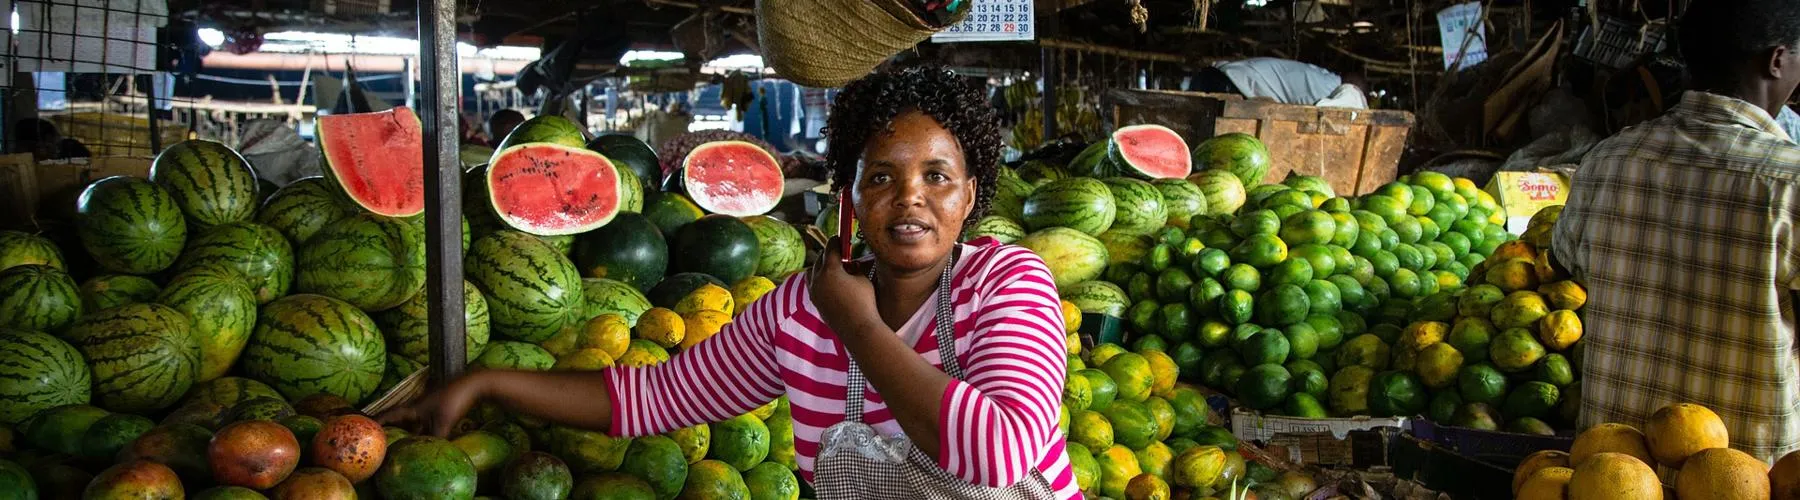 Woman in market, Nairobi, Kenya